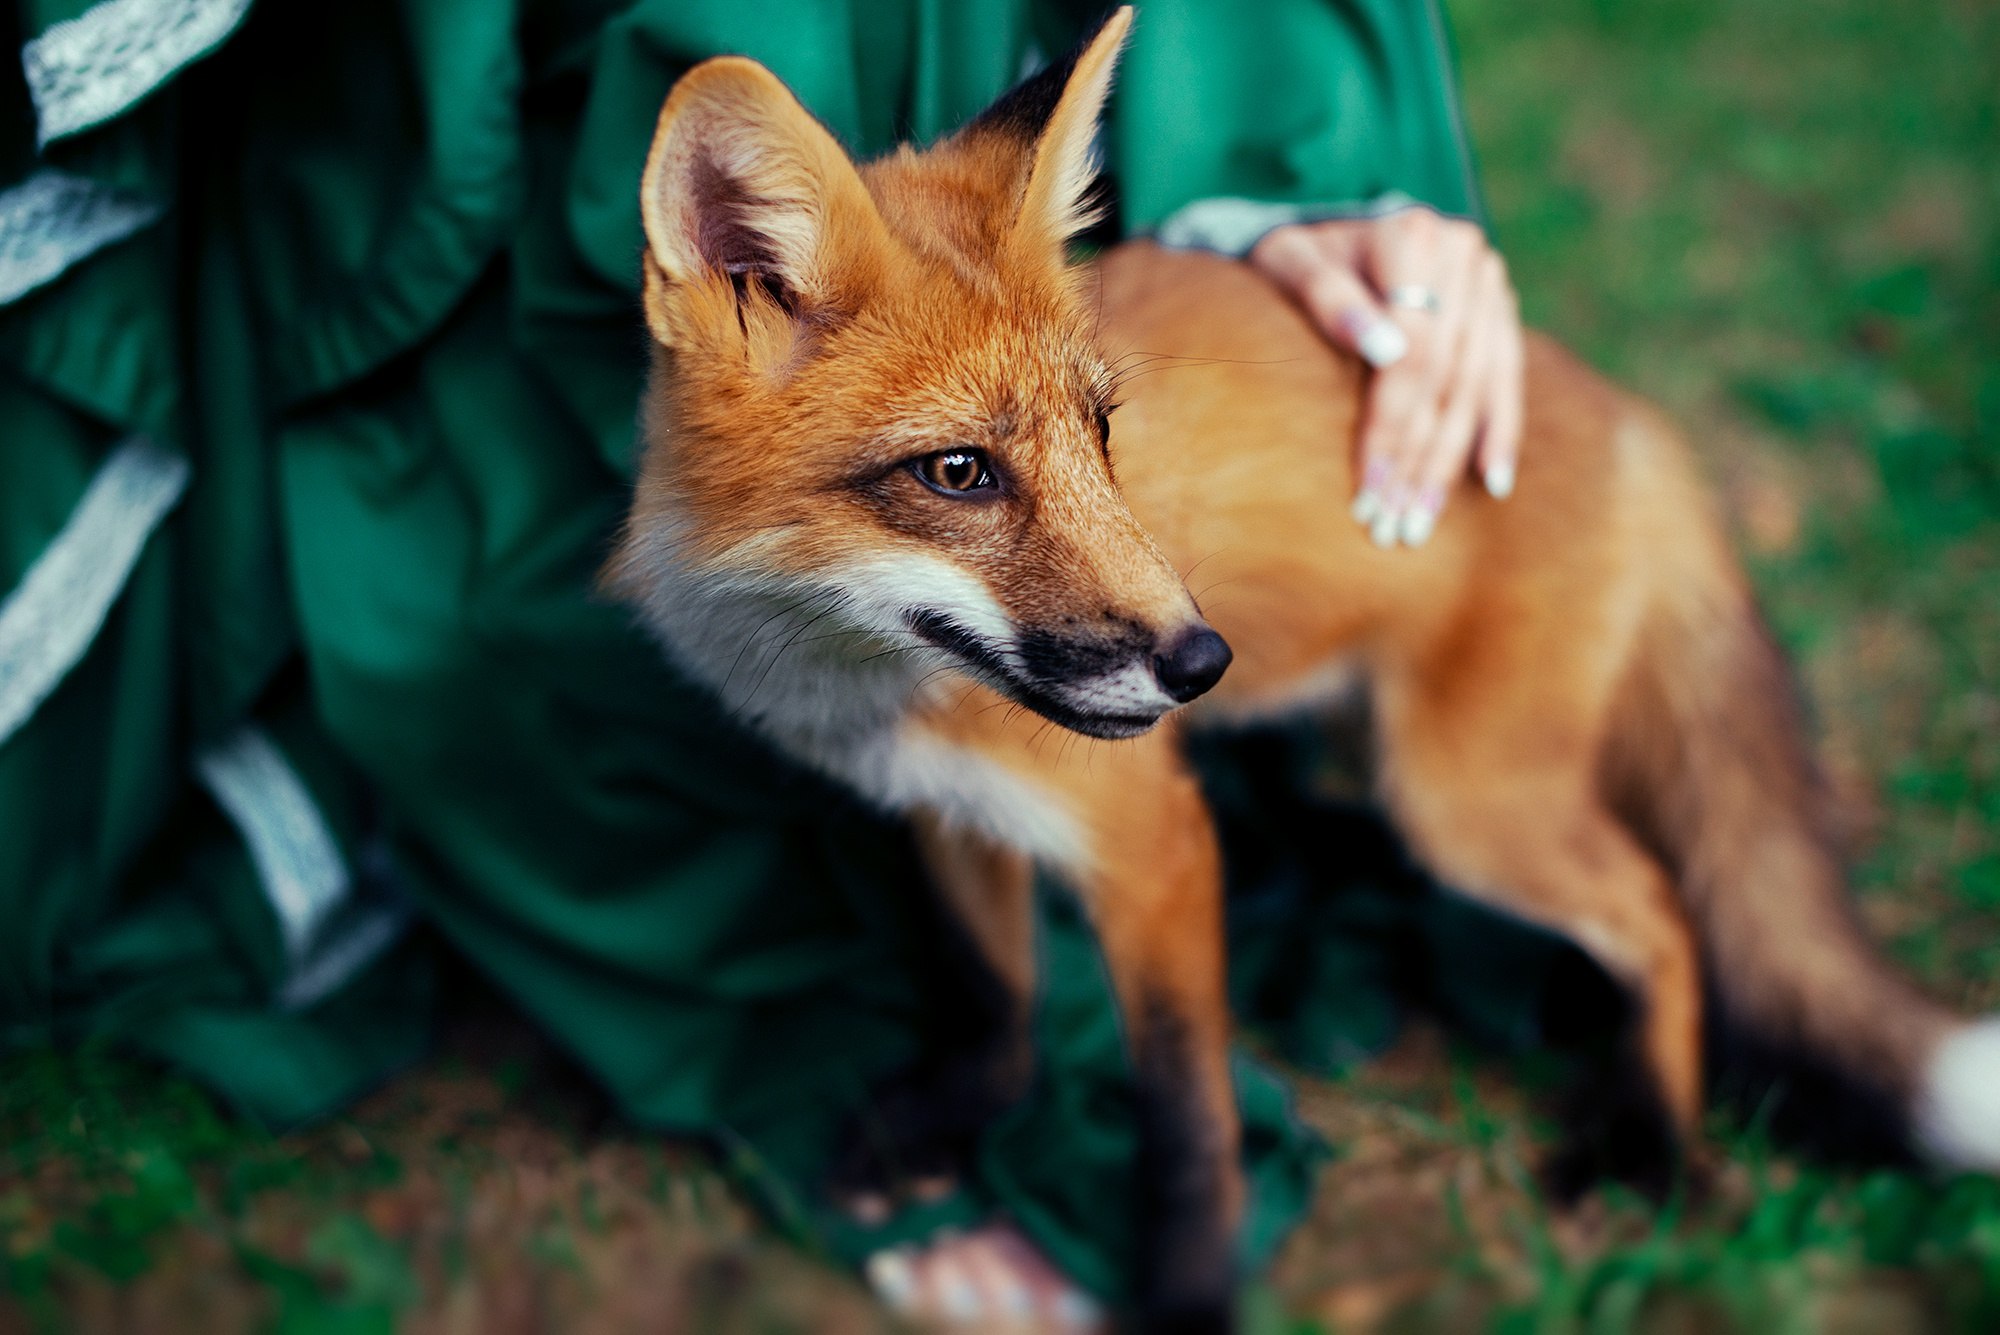 P fox